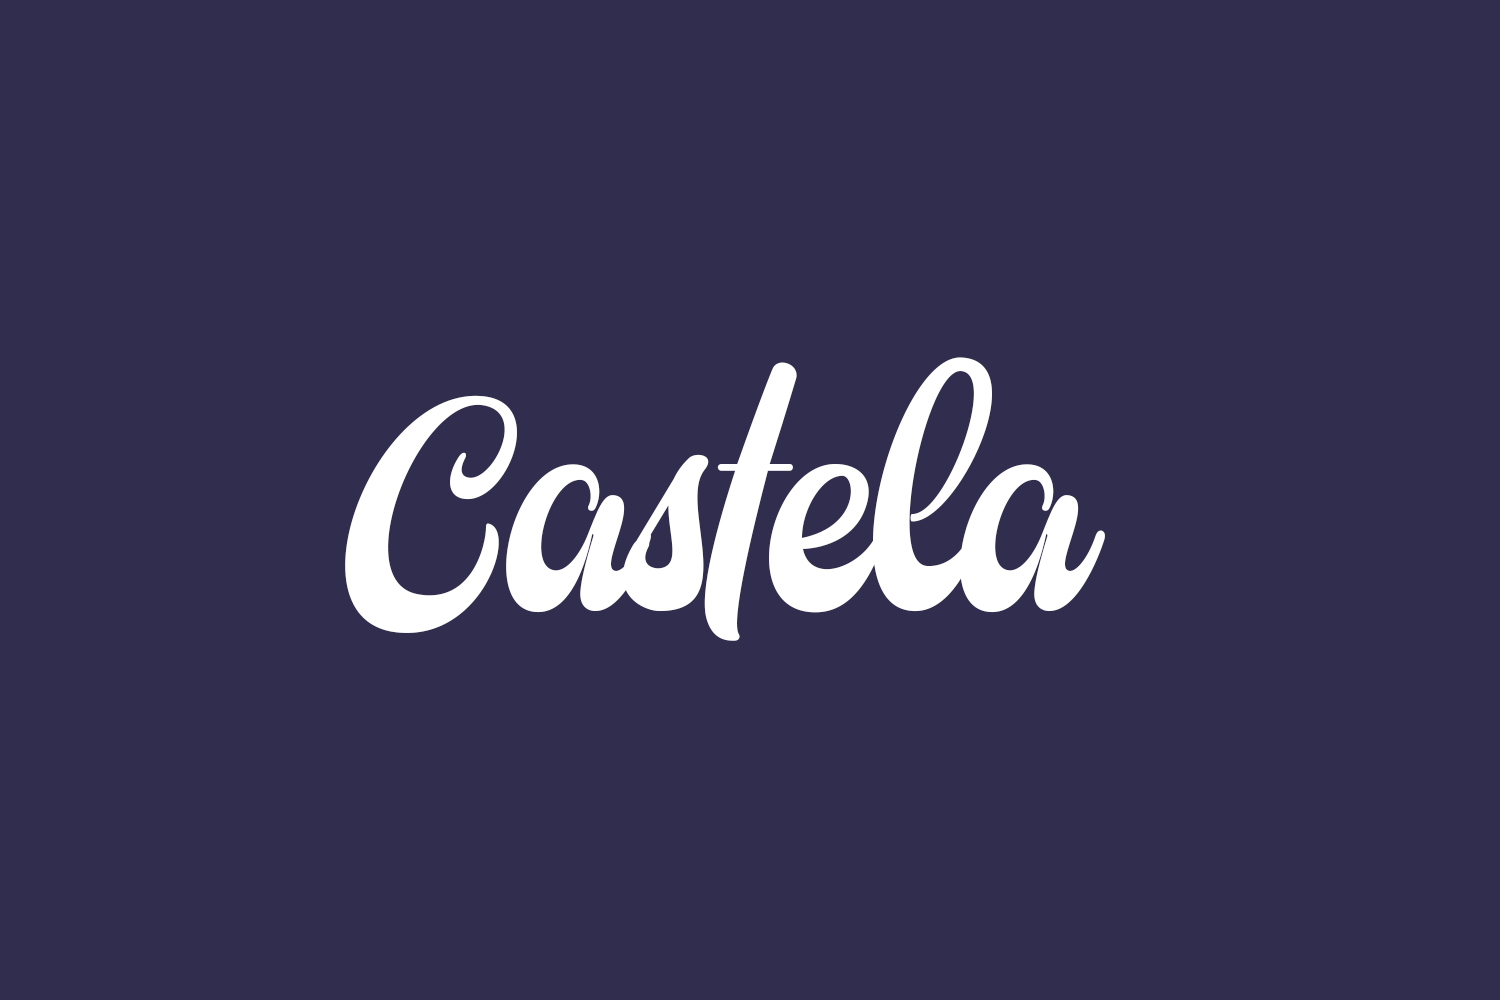 Castela Free Font